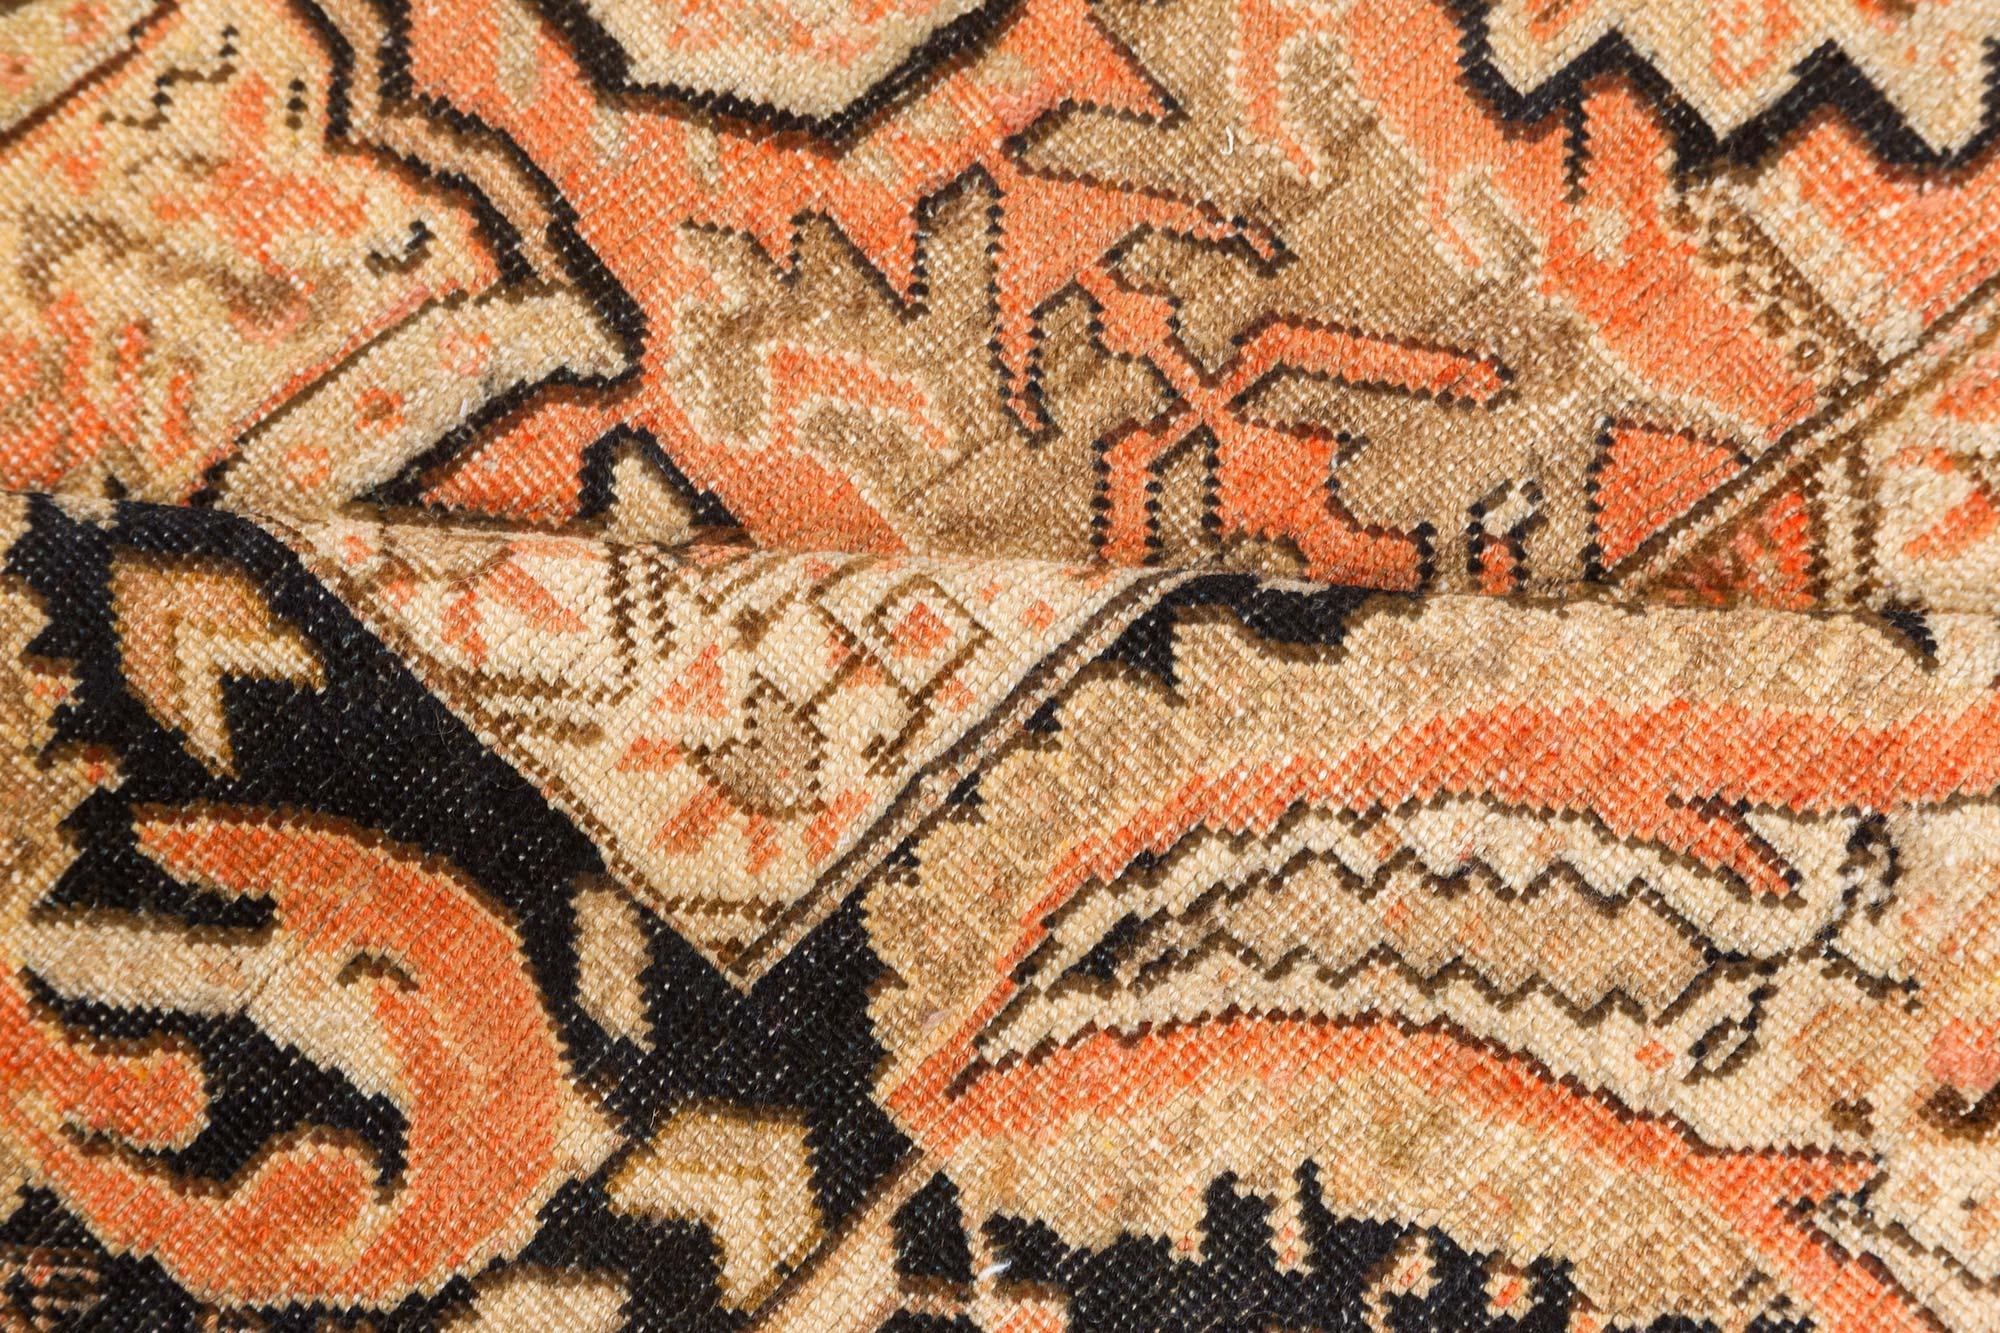 Authentic 1900s Karabagh Bold Design Handmade Wool Rug
Size: 7'1